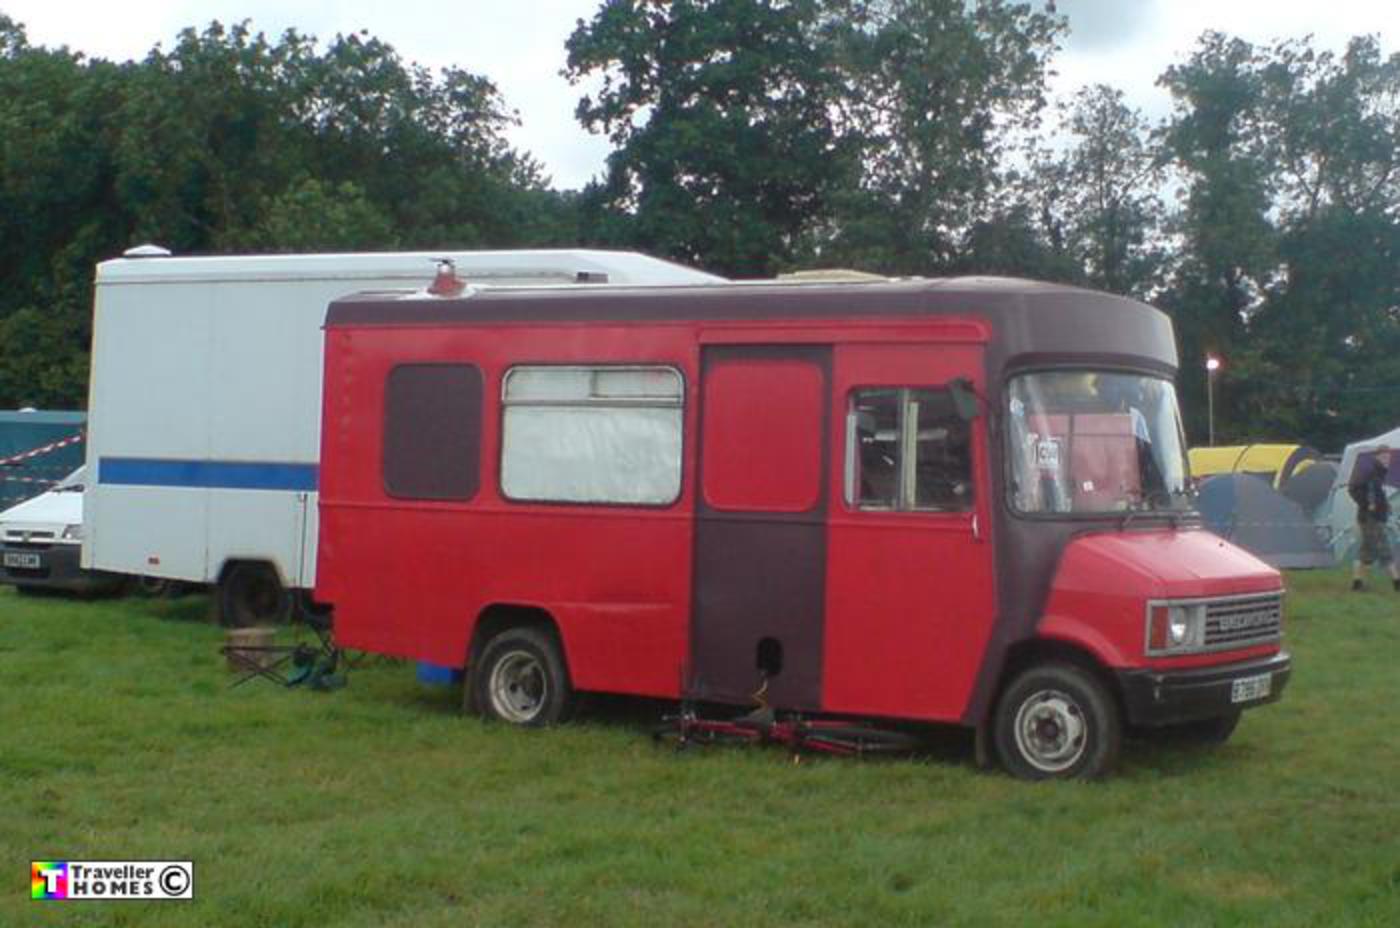 Red & Black CF Minibus :: Traveller Homes